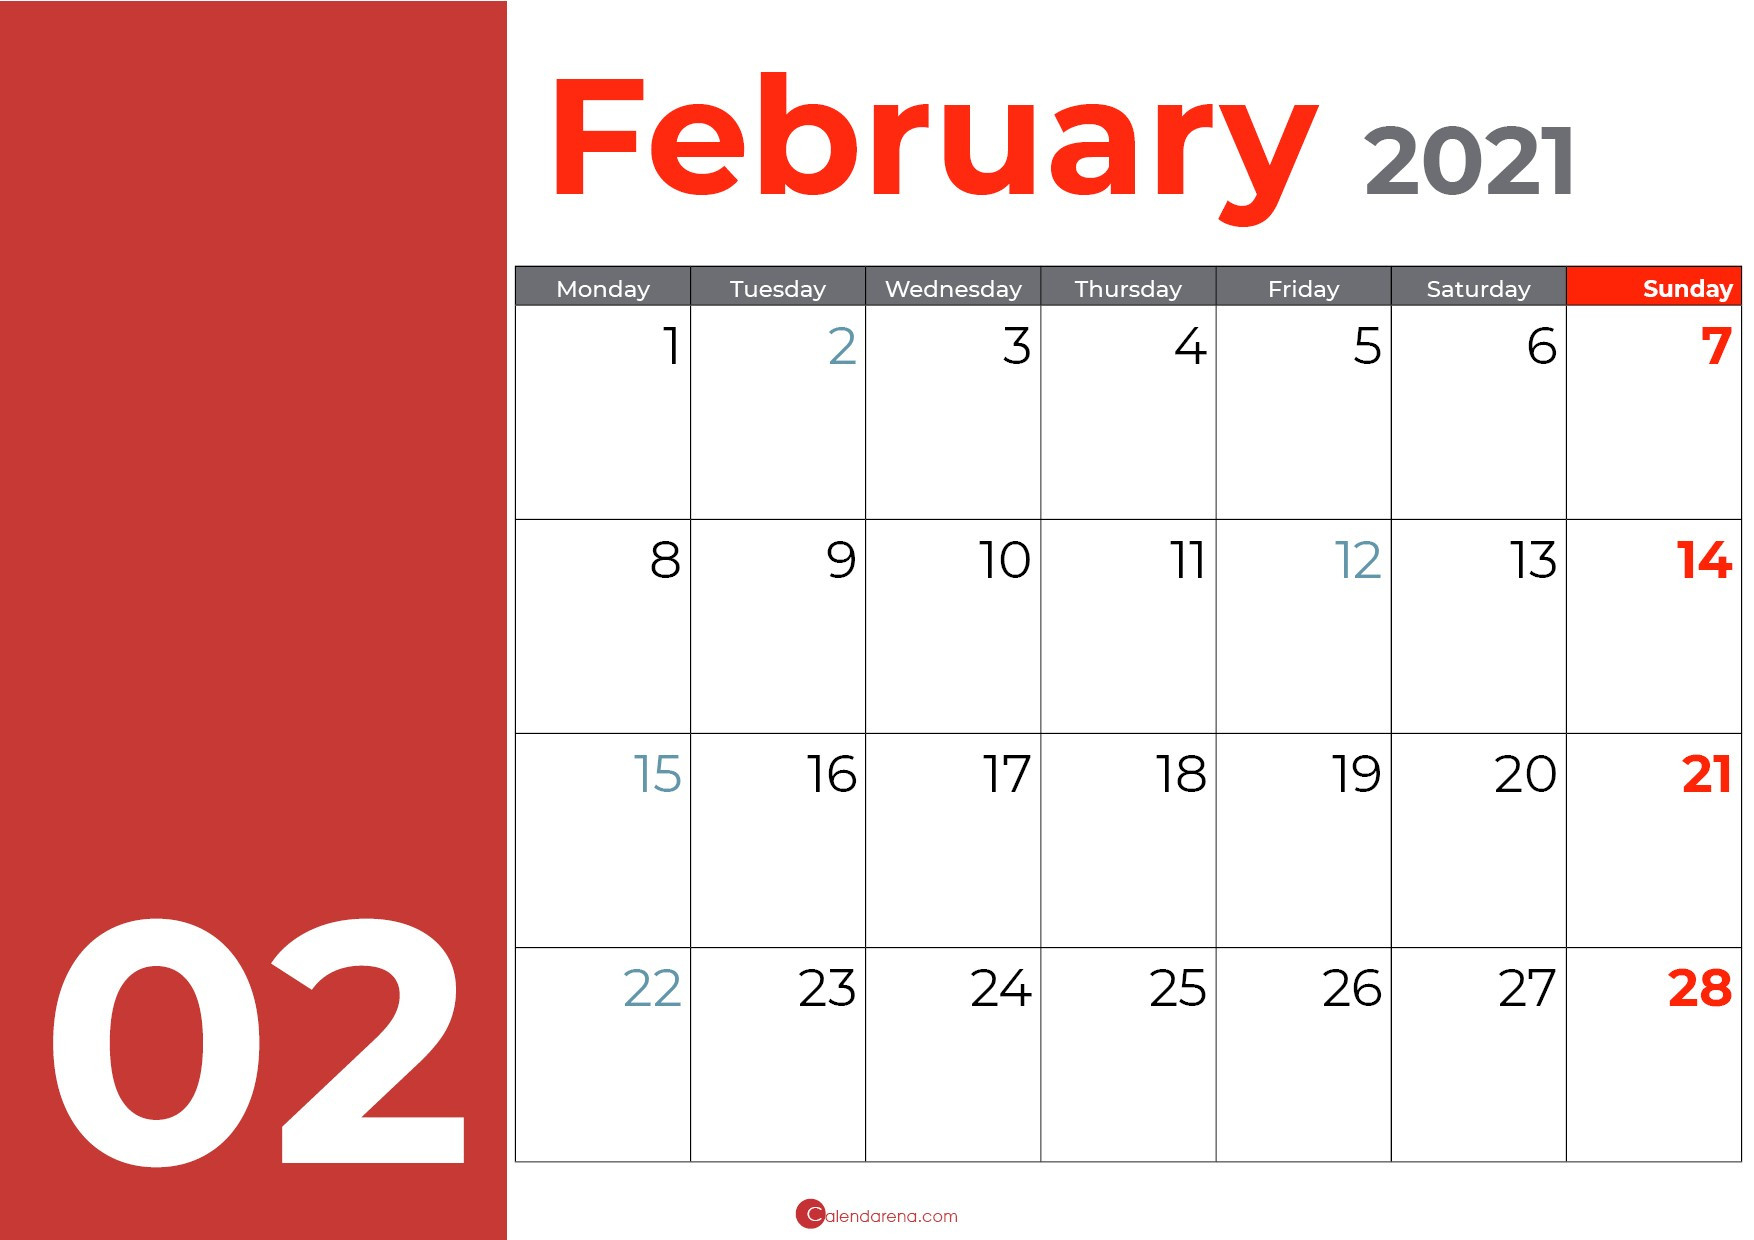 Best Free ?? Blank February Calendar 2021 - Calendarena-February Calendar 2021